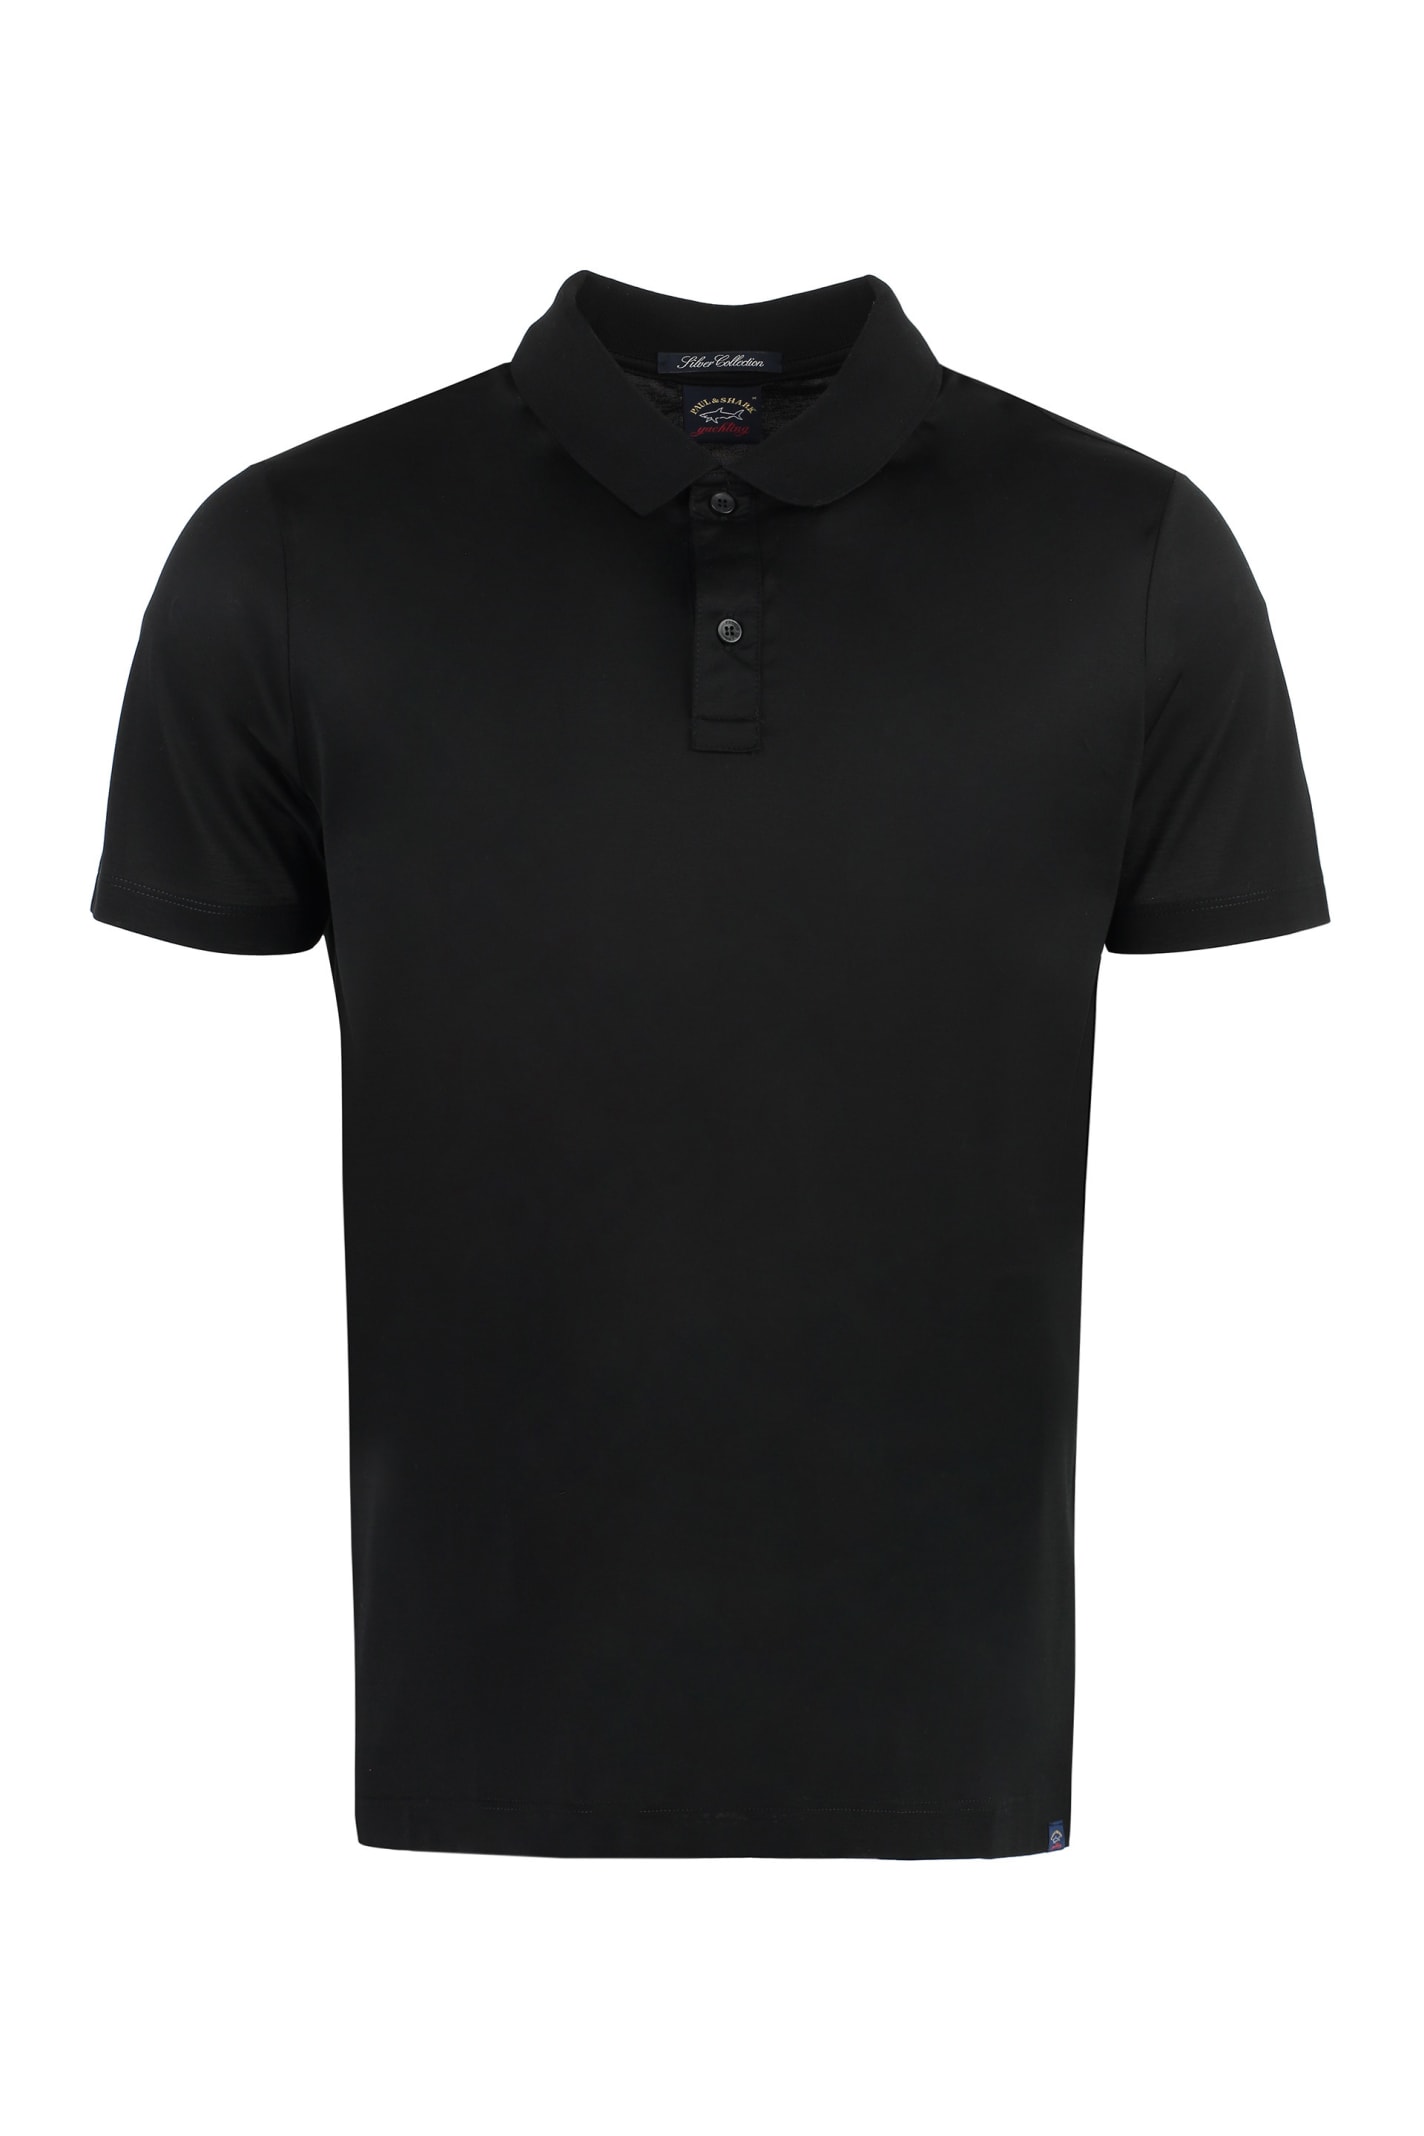 Paul&amp;shark Short Sleeve Cotton Polo Shirt In Black